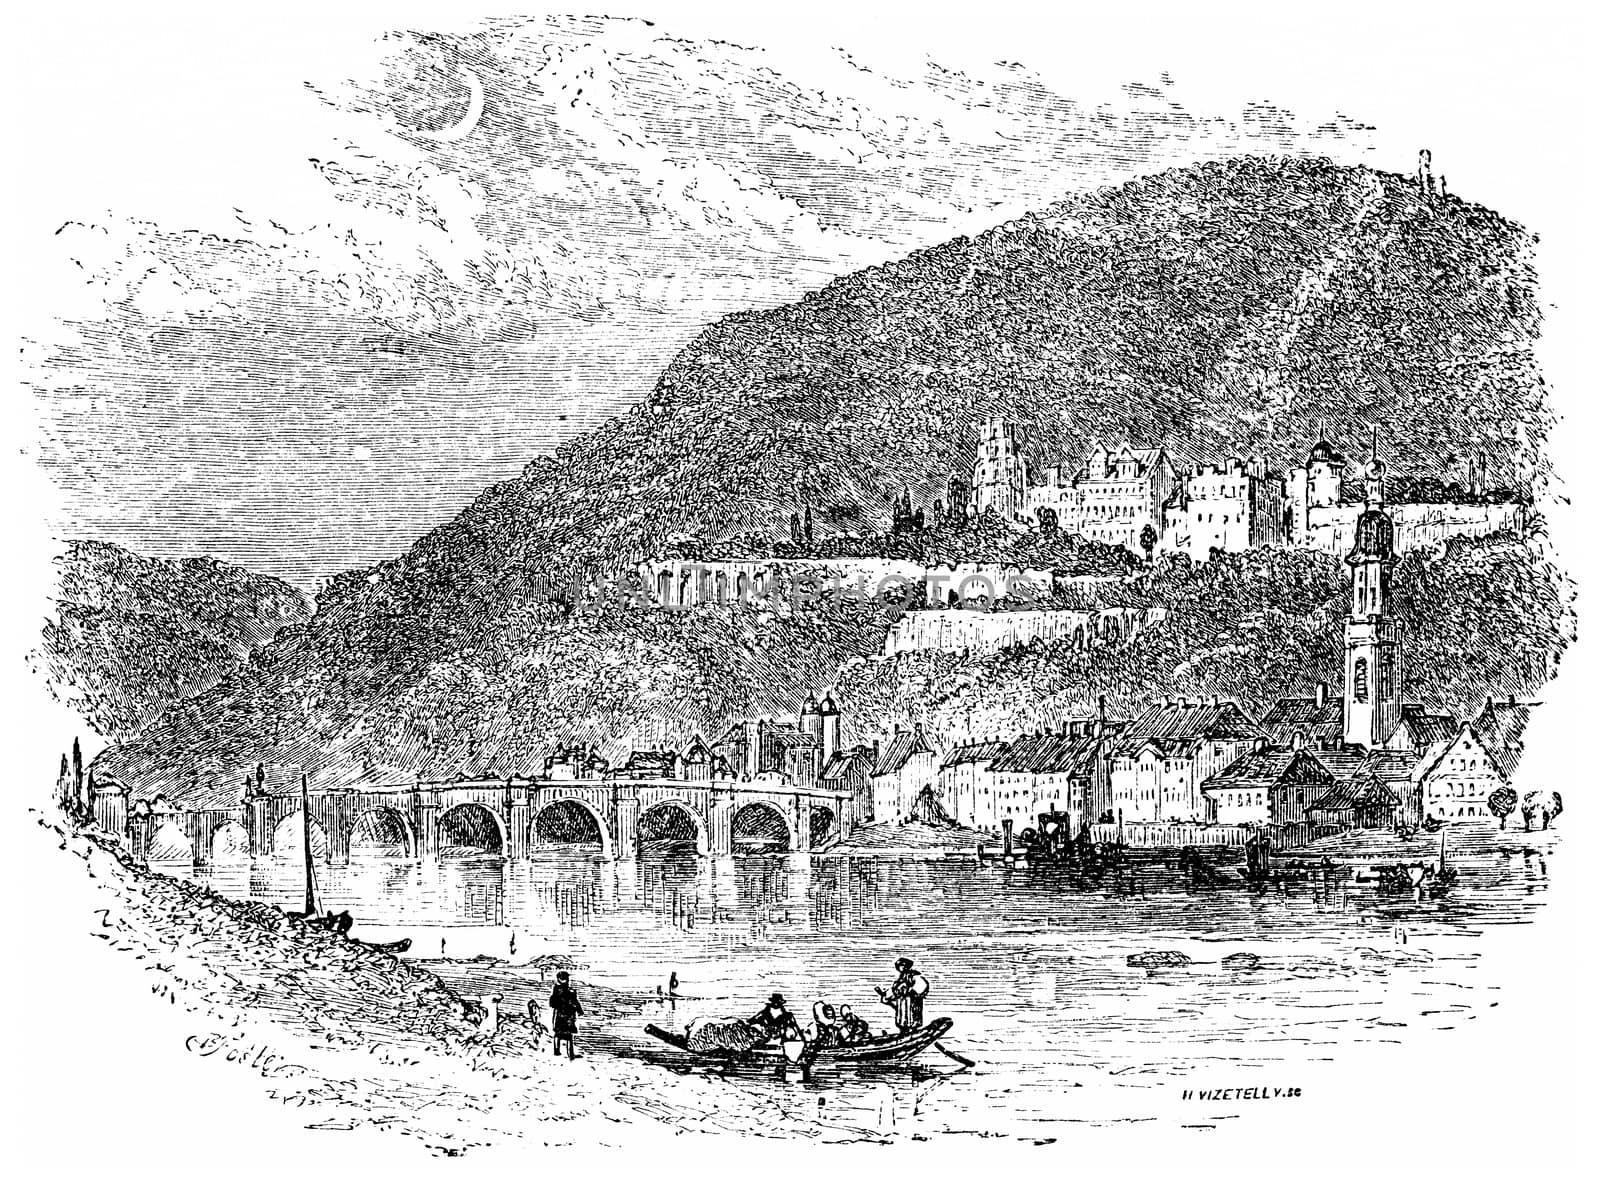 Heidelberg, vintage engraved illustration. From Chemin des Ecoliers, 1861.
